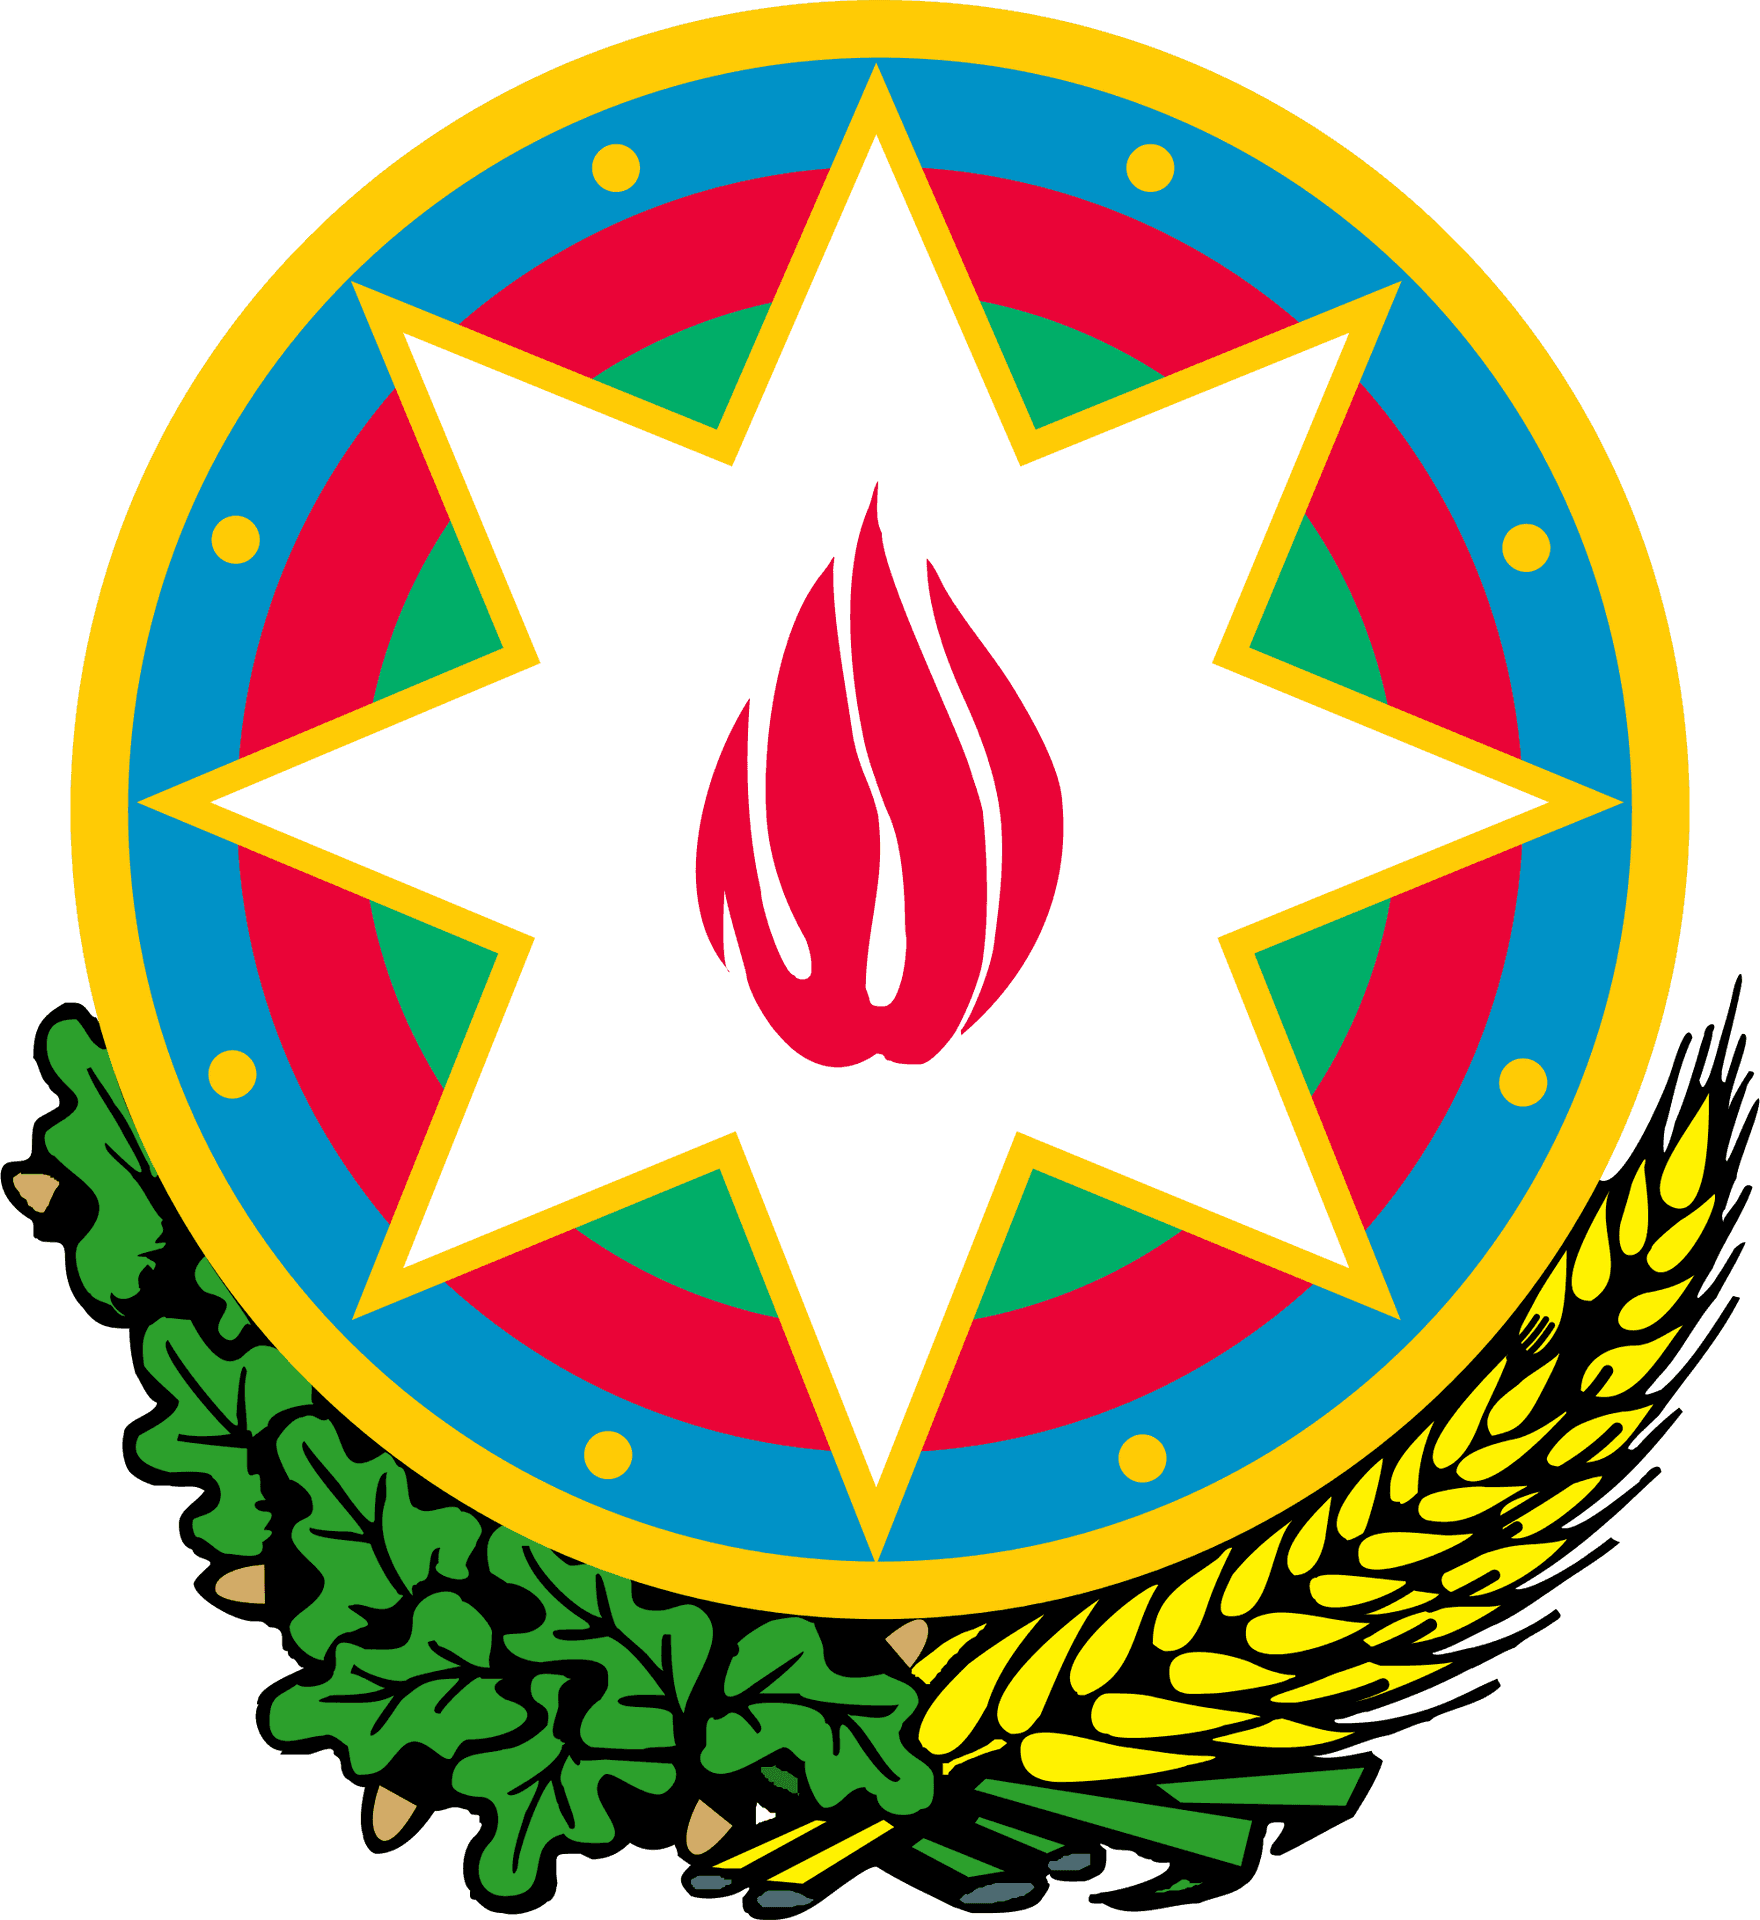 Azerbaijan Ministryof Defense Emblem PNG image